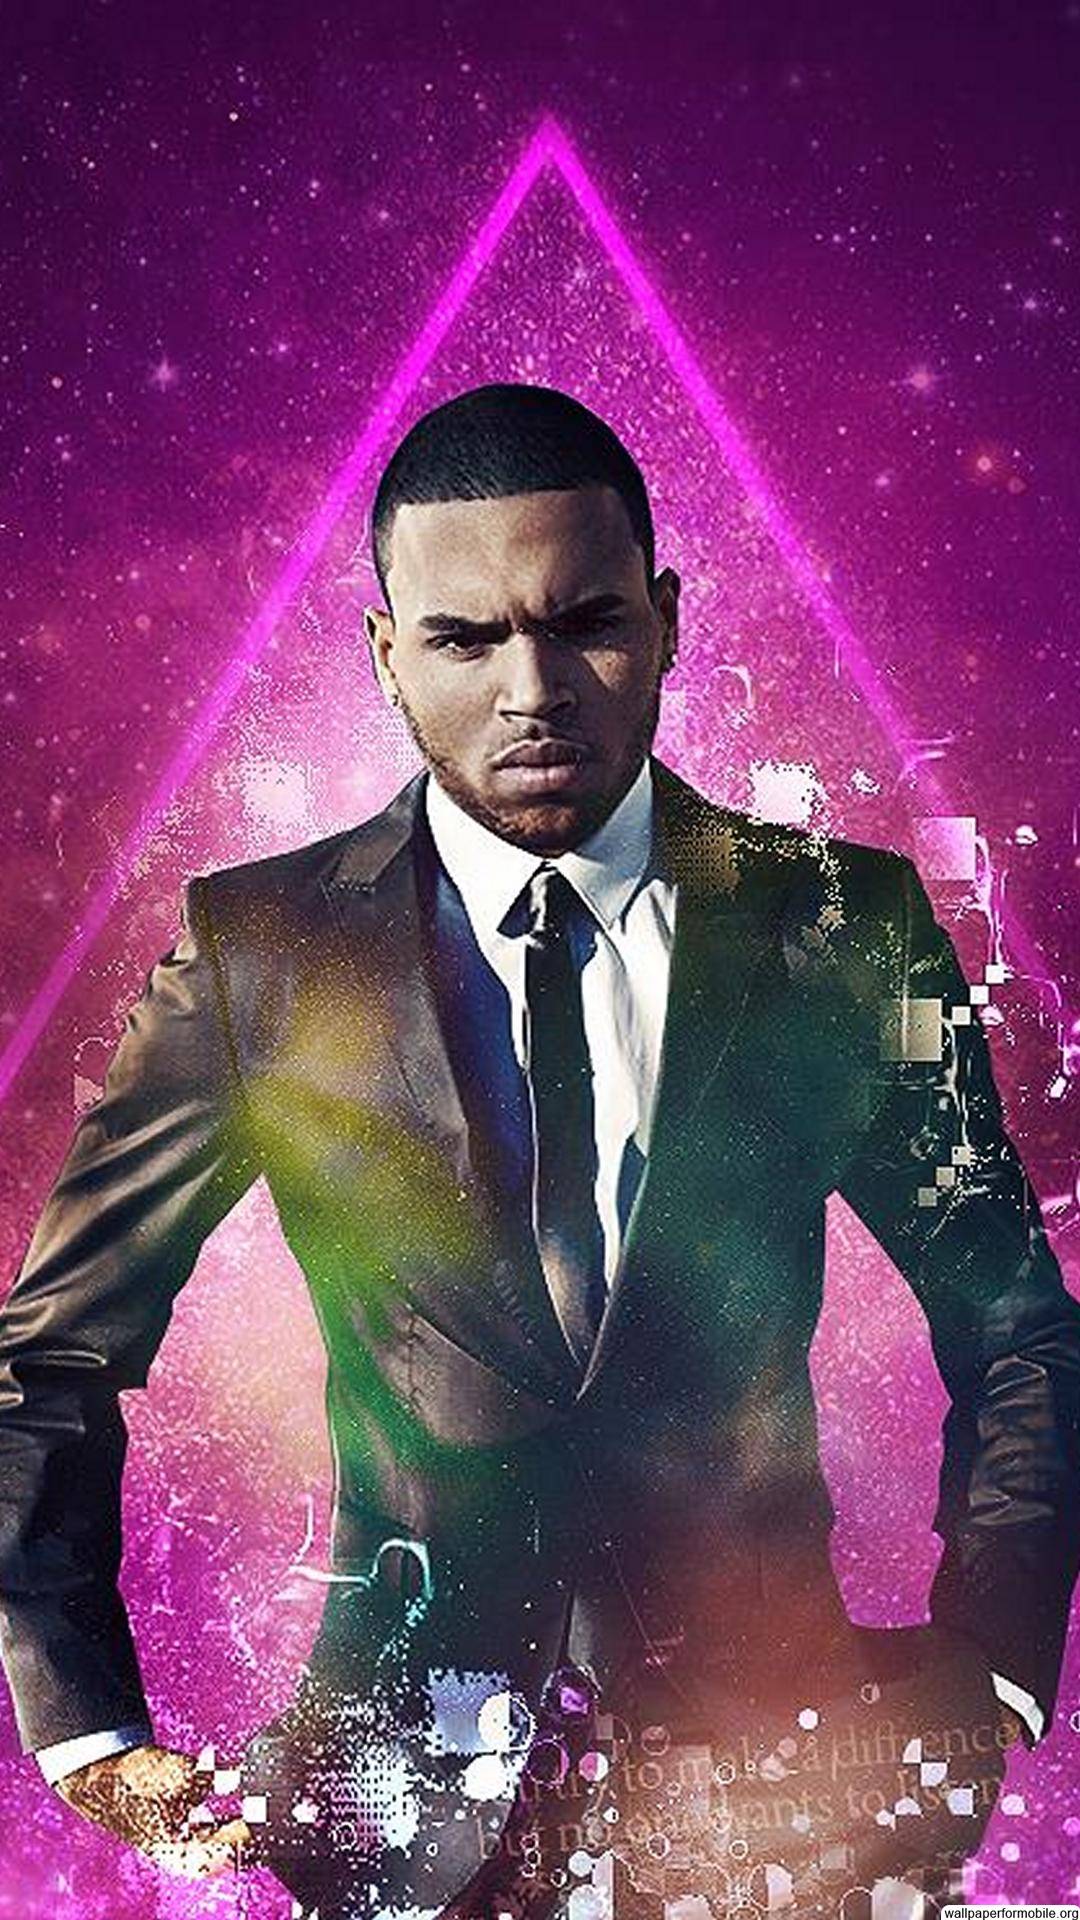 Chris Brown Wallpaper Free Chris Brown Background